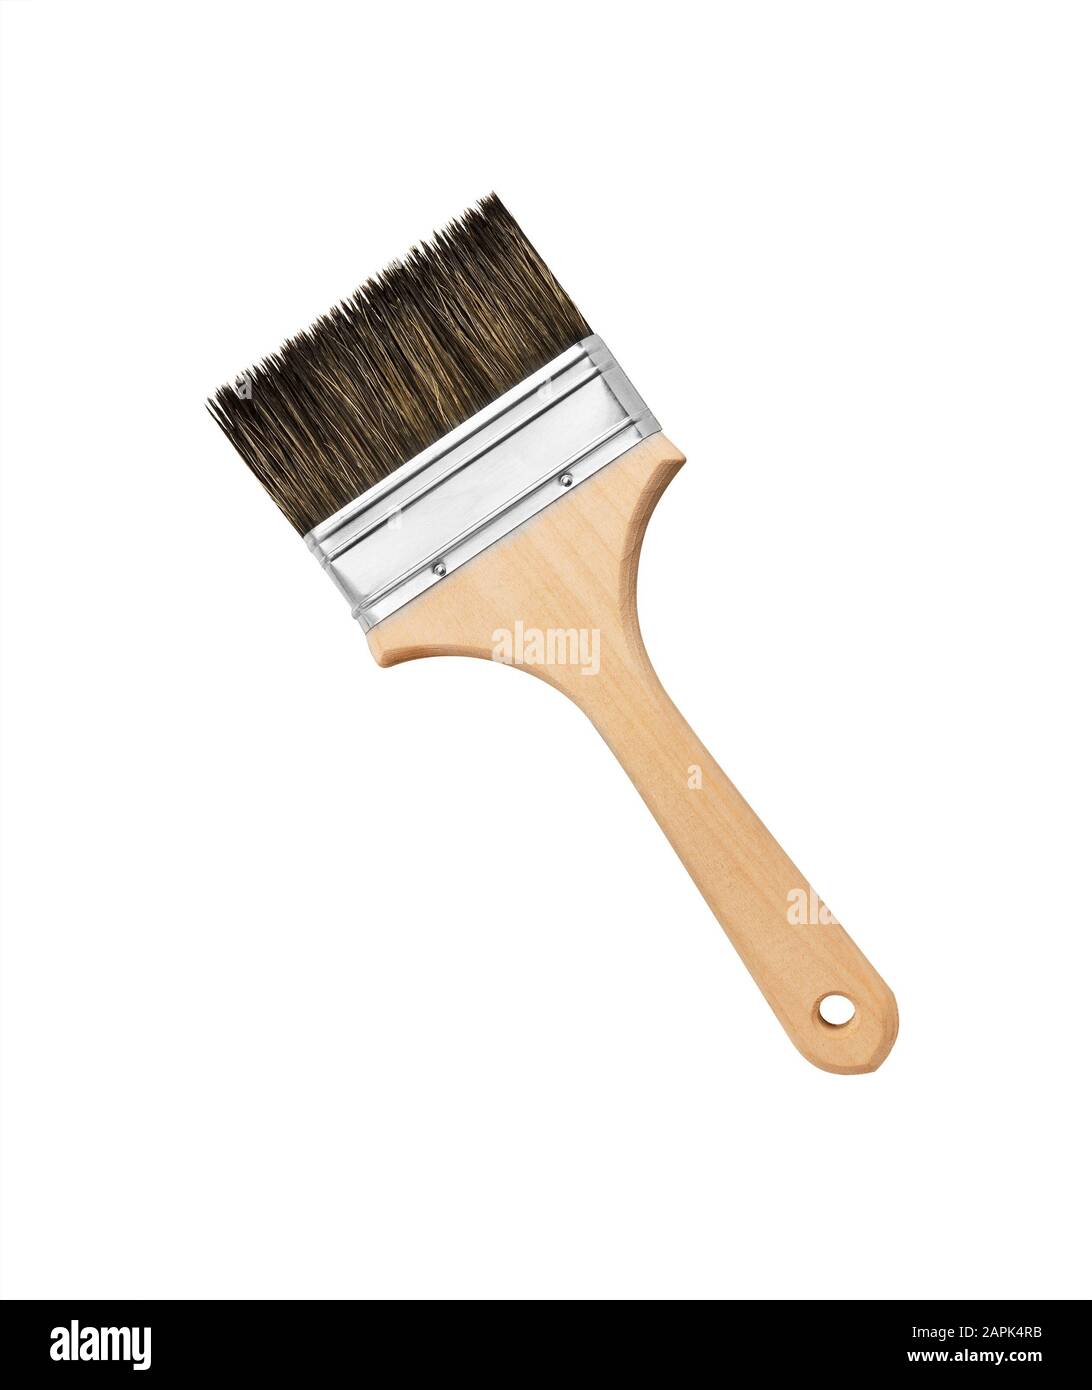 Paint brush isolated on a white background. Stock Photo